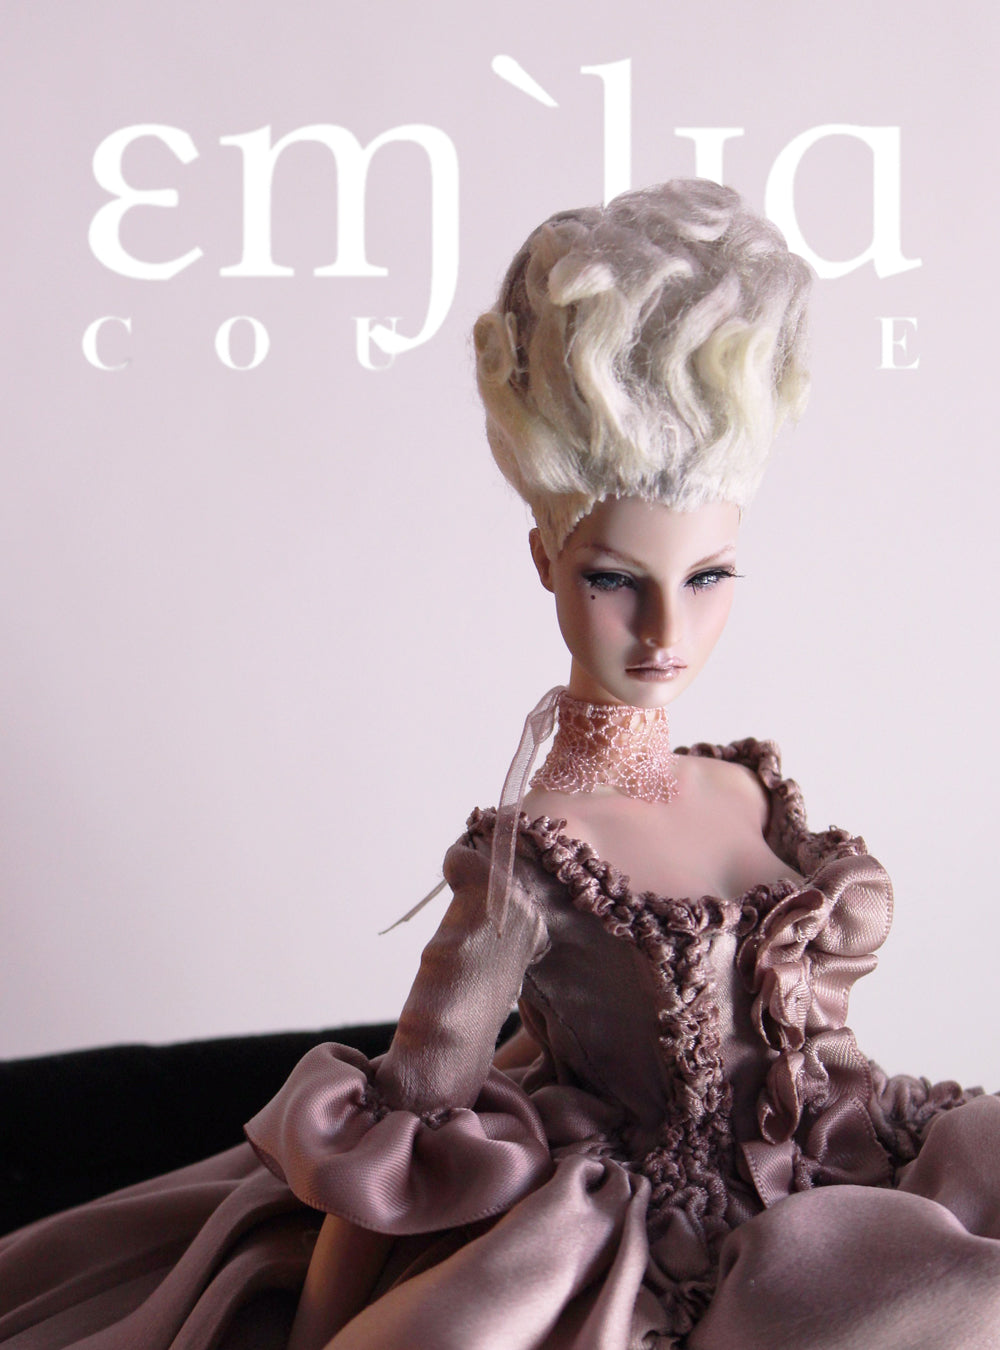 Fashion Royalty OOAK Marie Antoiette French Queens Duel Doll Set by doll artist Emilia Nieminen